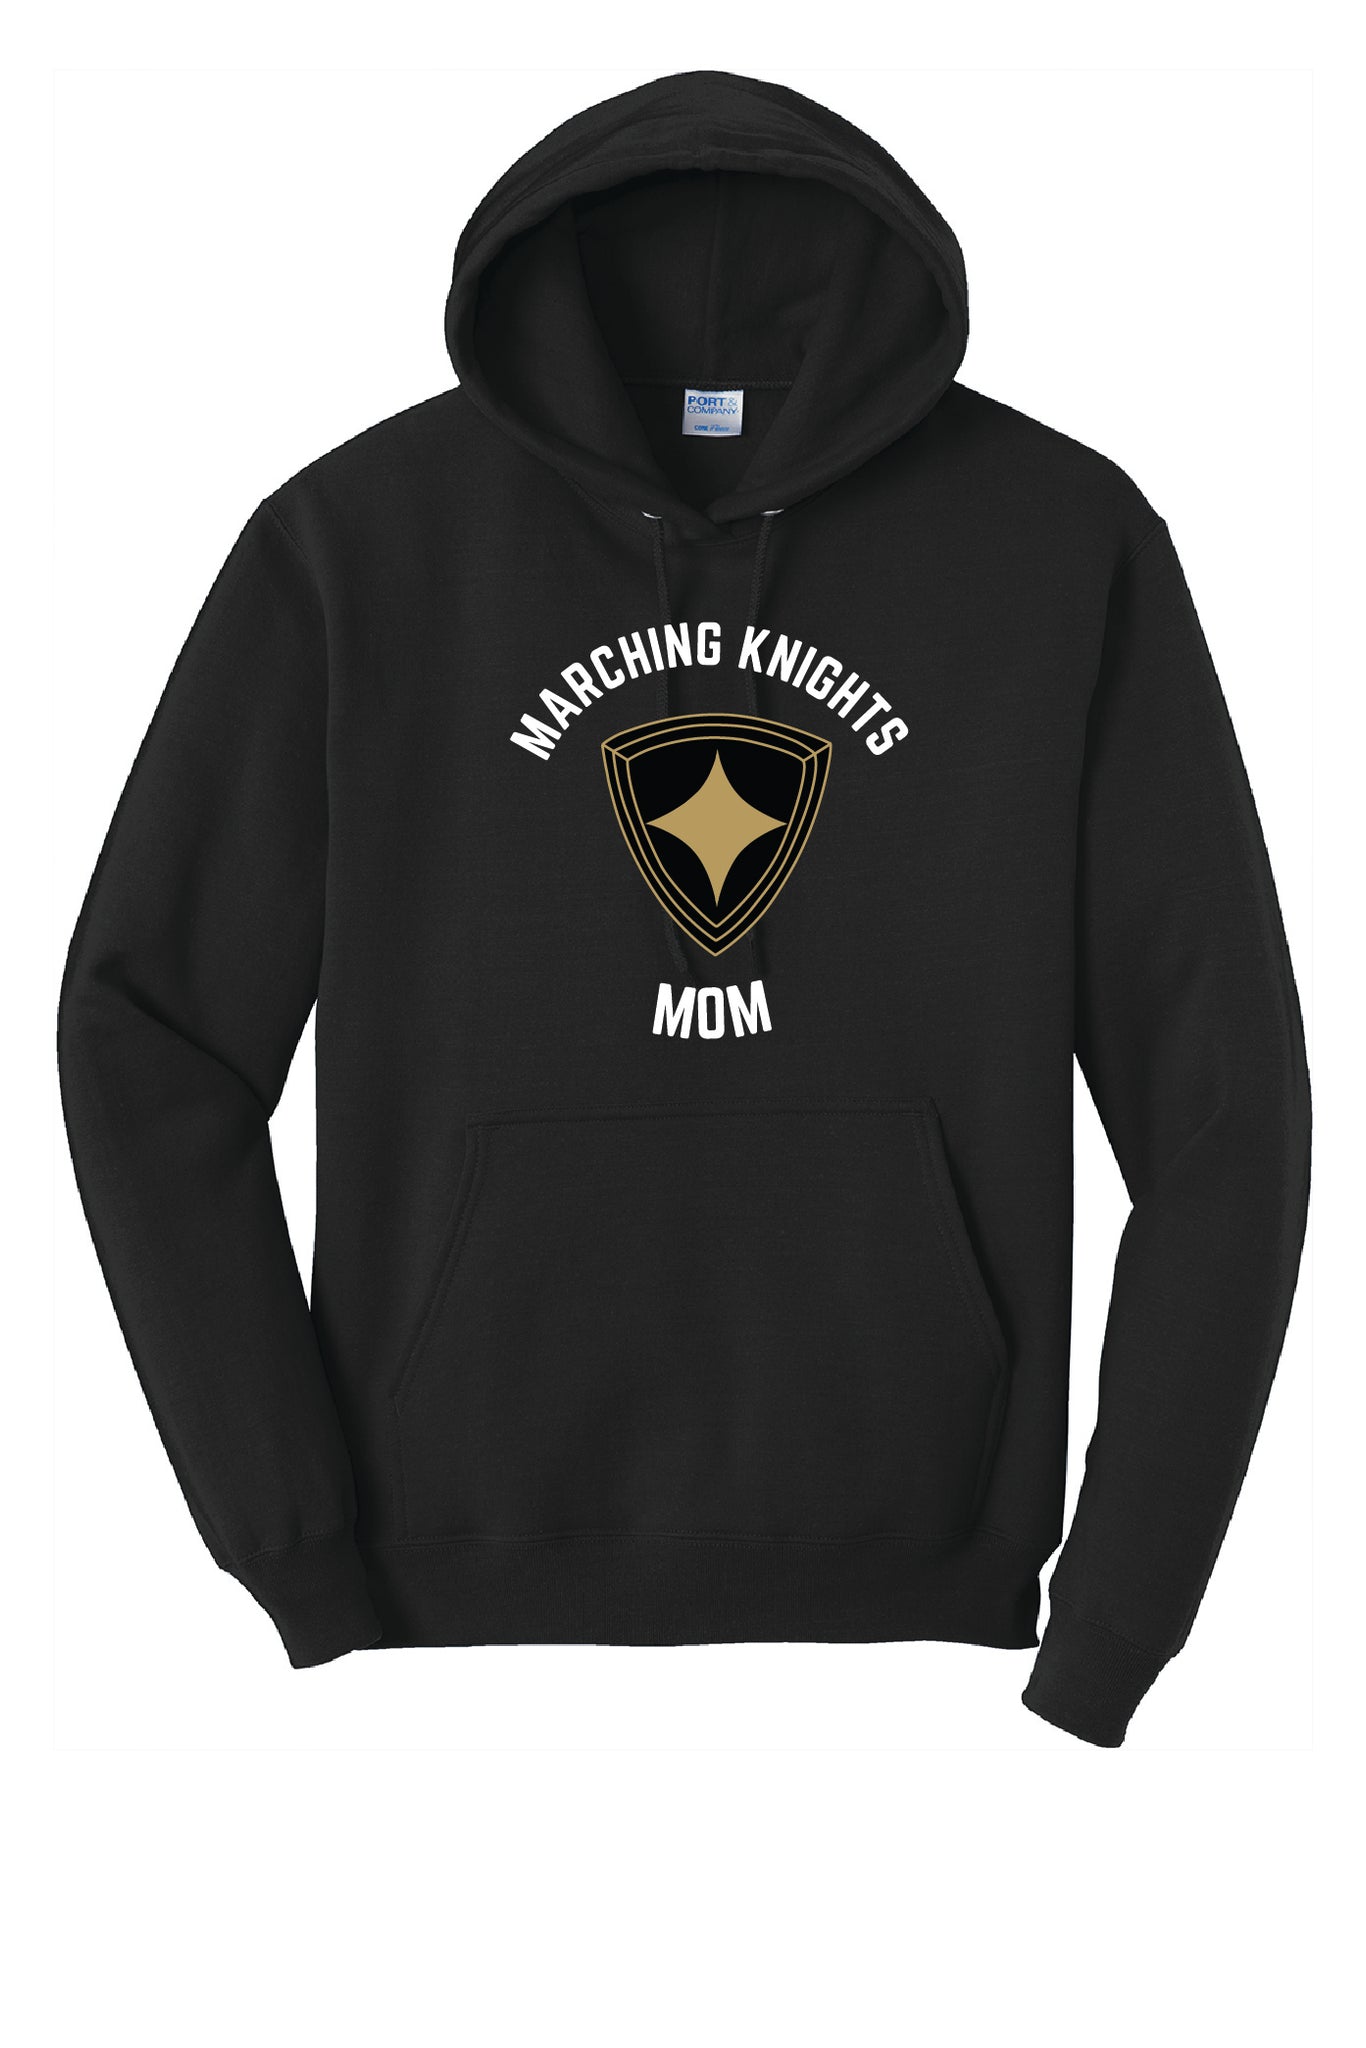 Mom Hooded Sweatshirt (Black or Gray) - NEW